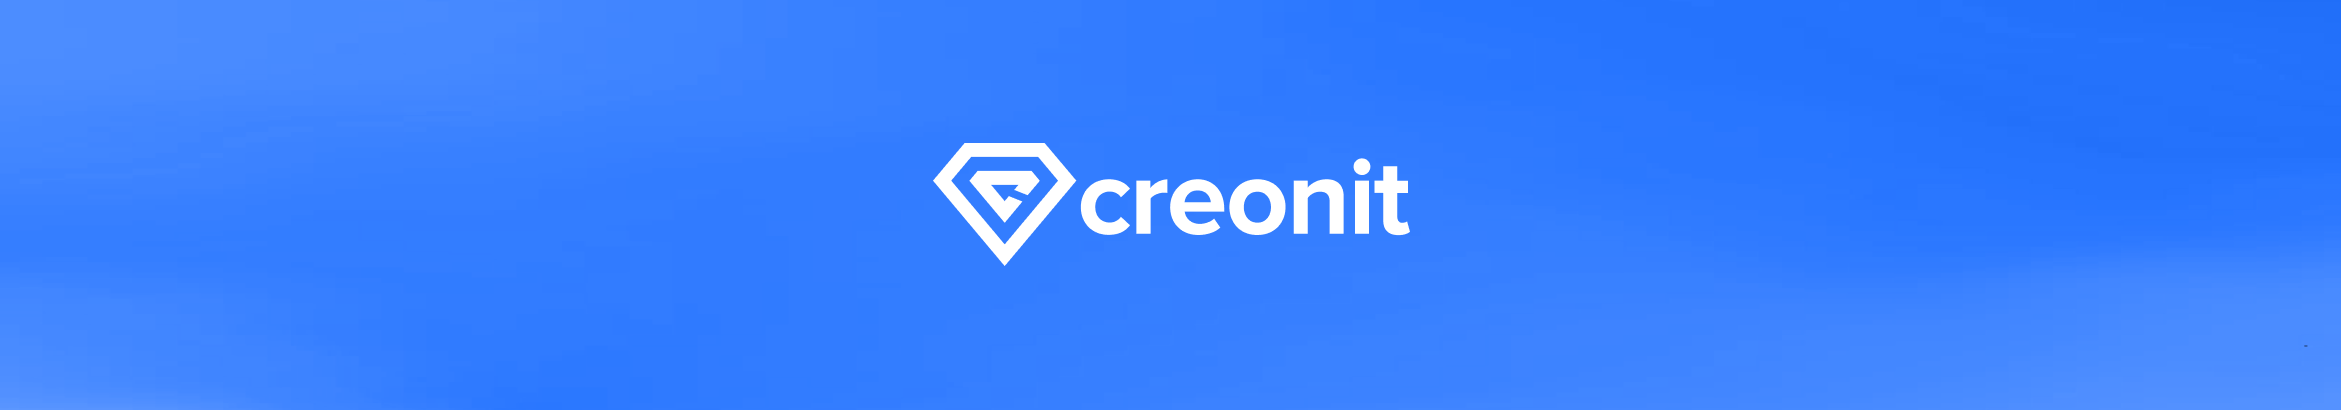 Creonit ® 的个人资料横幅